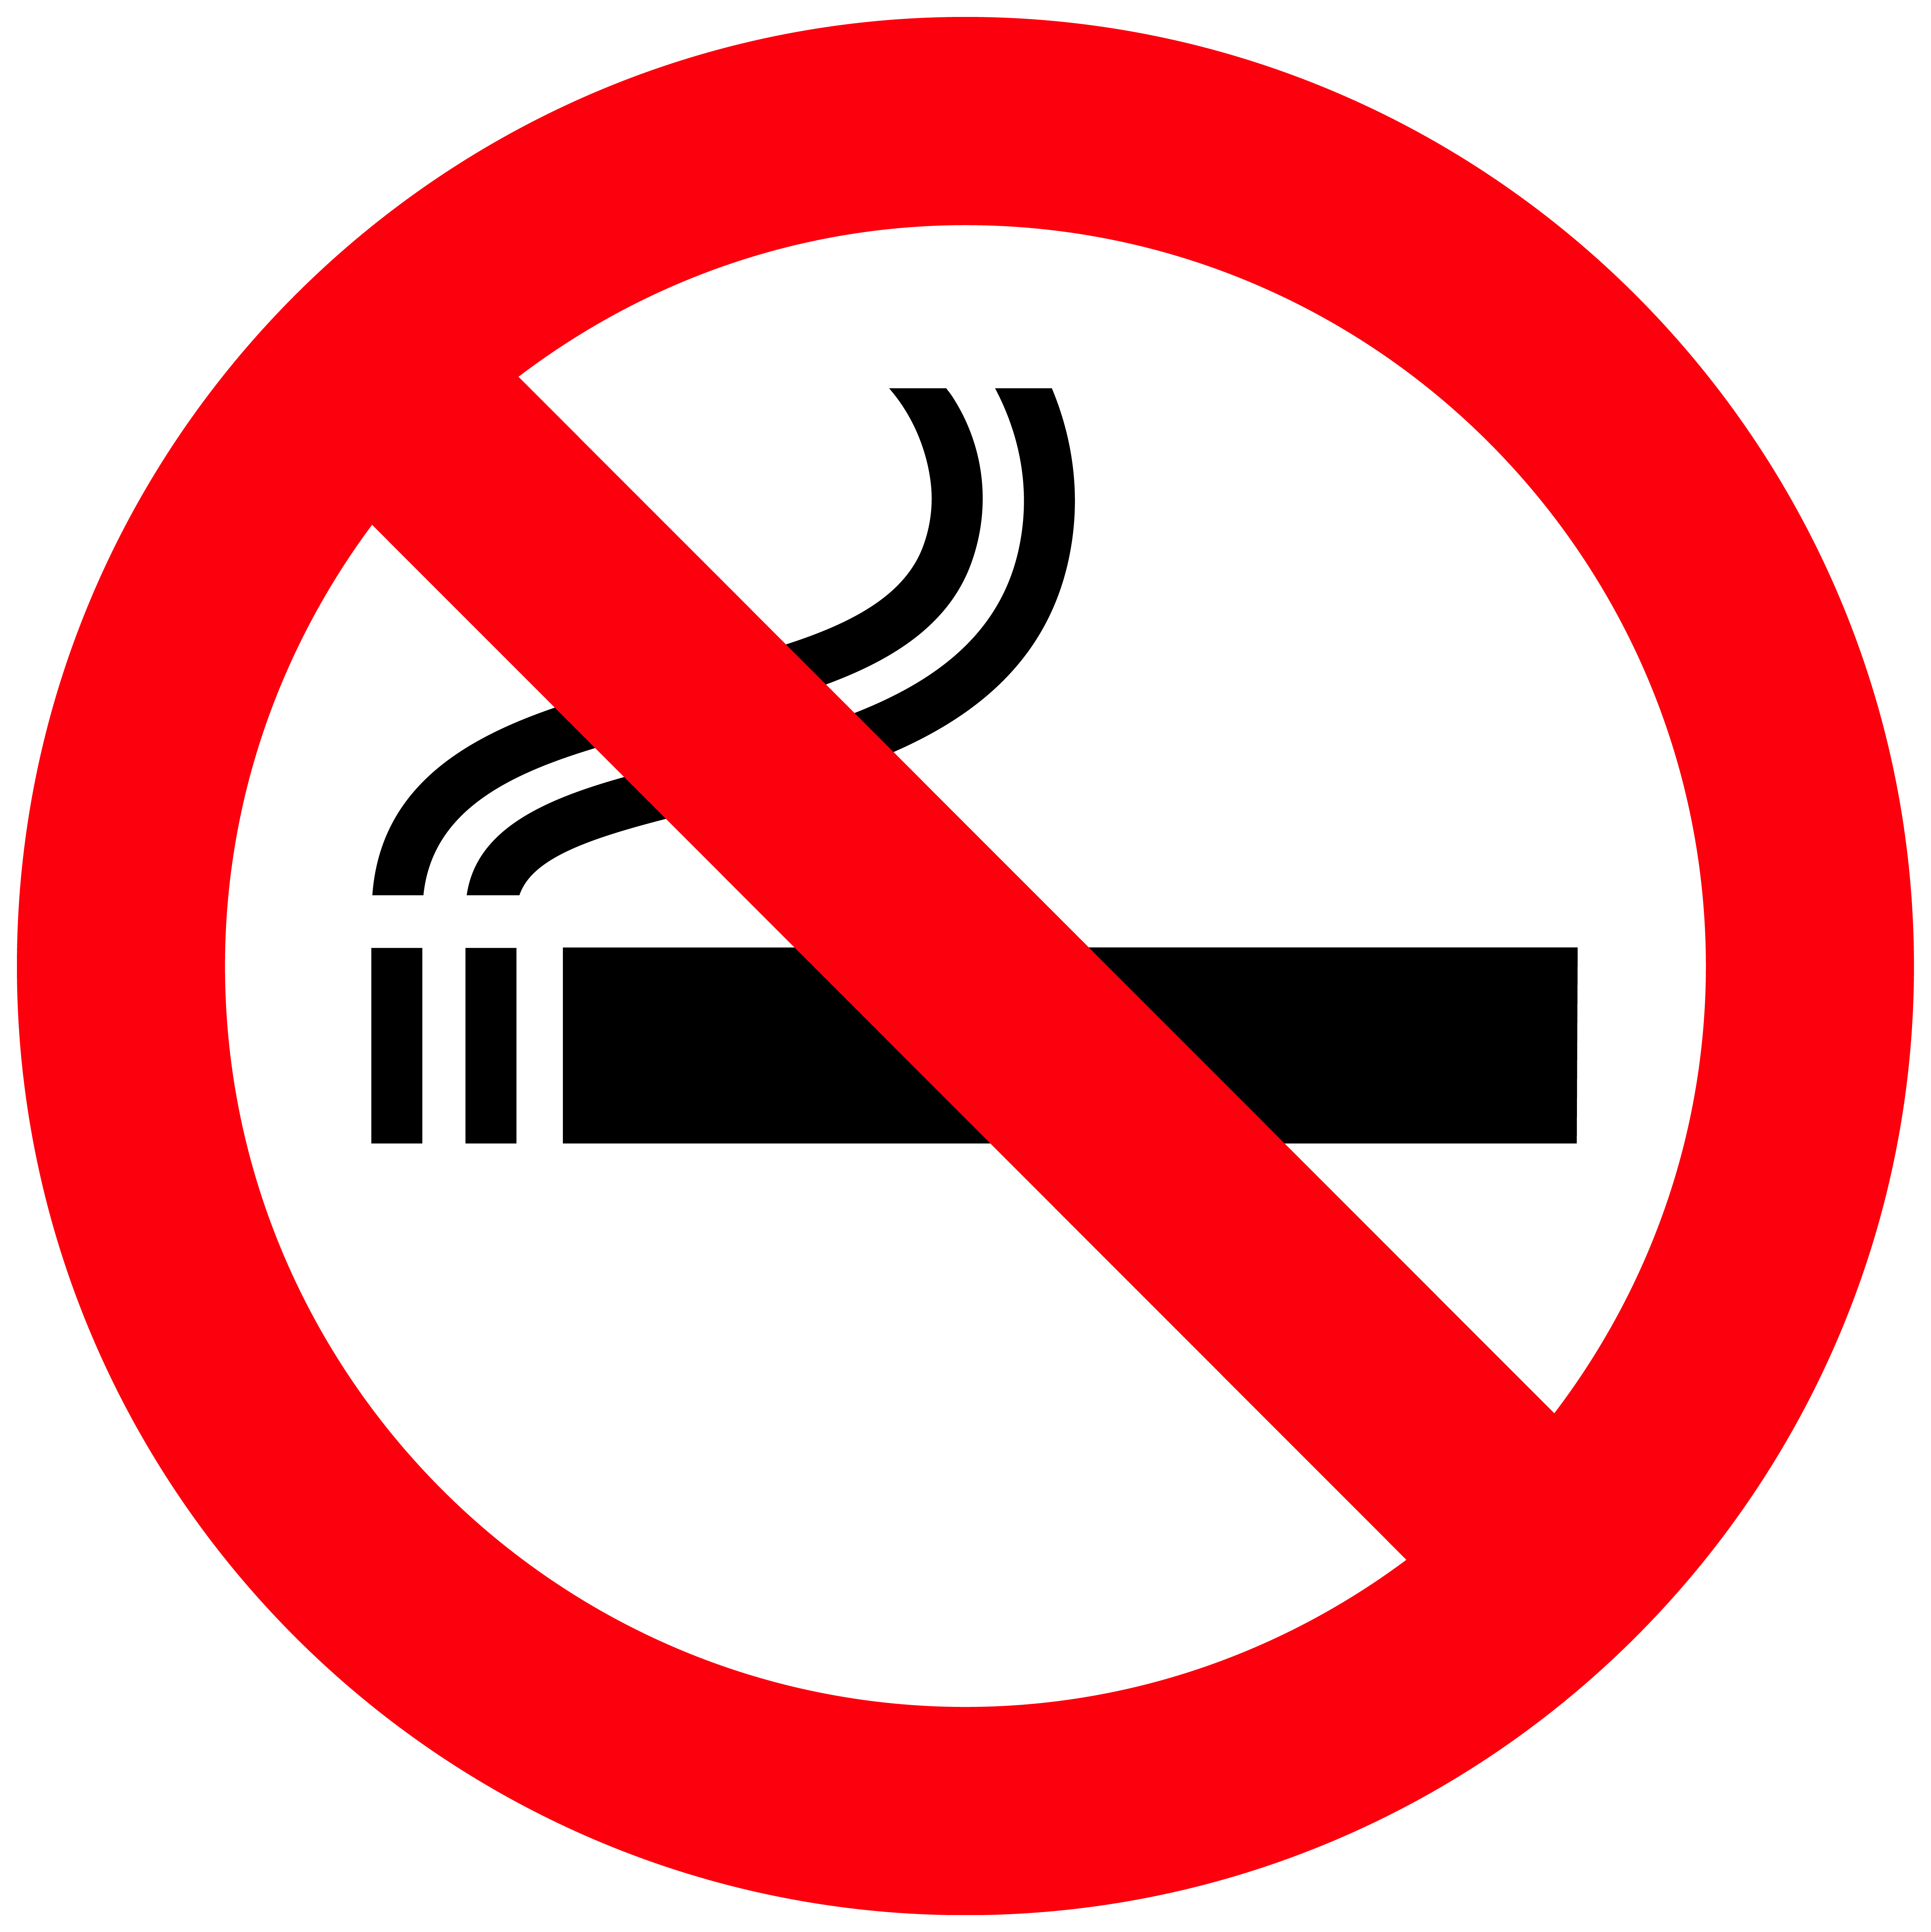 Free No Smoking Sign Png, Download Free No Smoking Sign Png png images